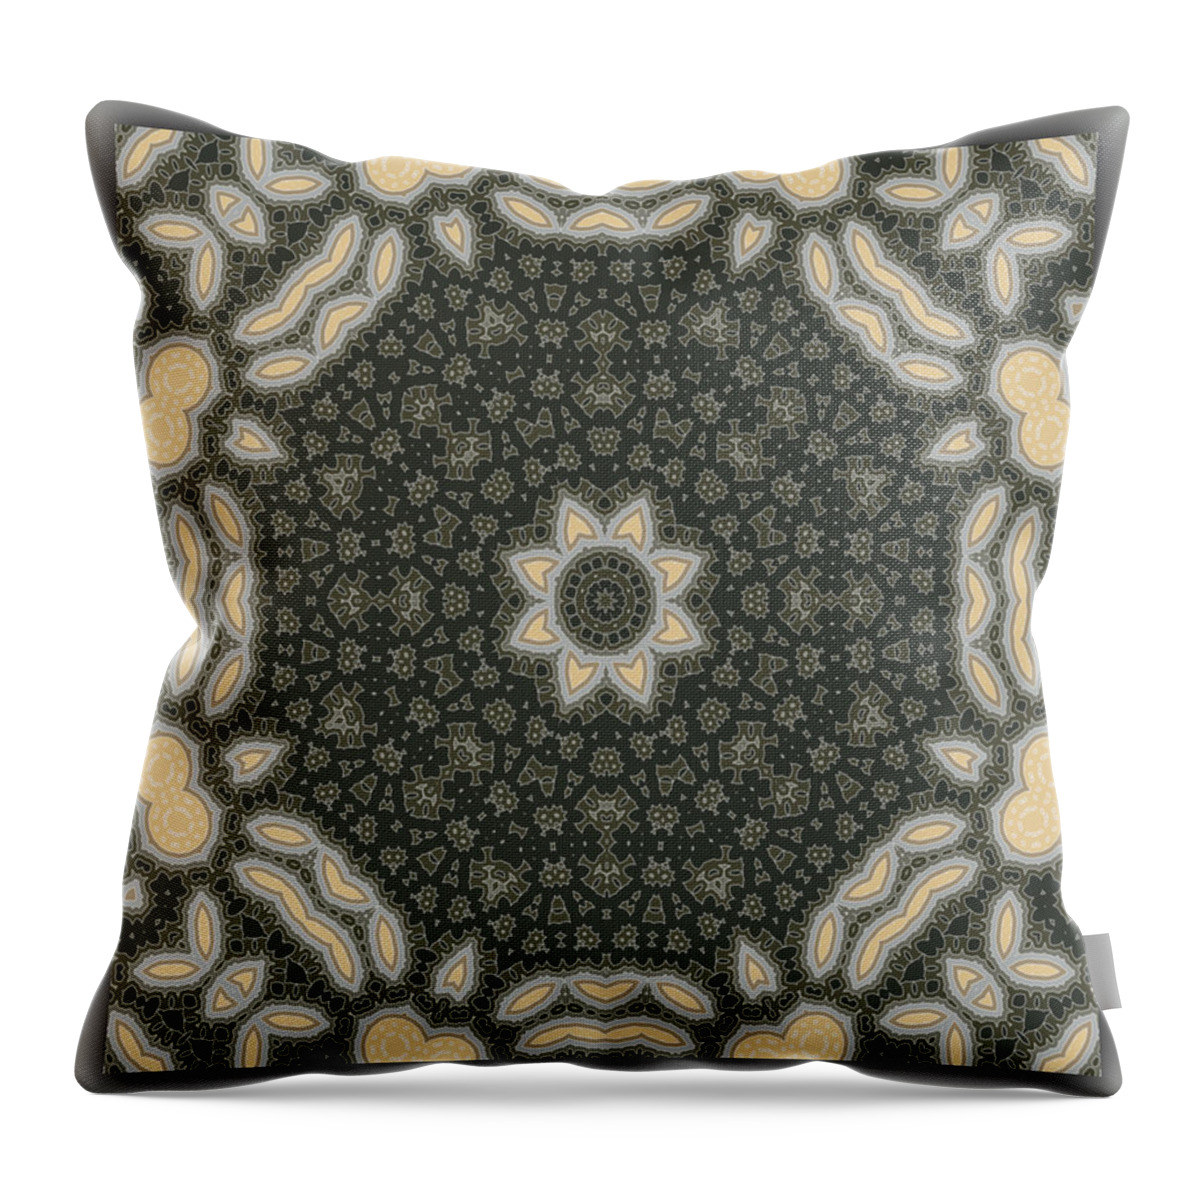 Kaleidoscope Throw Pillow featuring the digital art Sand and Shadows 3 by Lynn Evenson